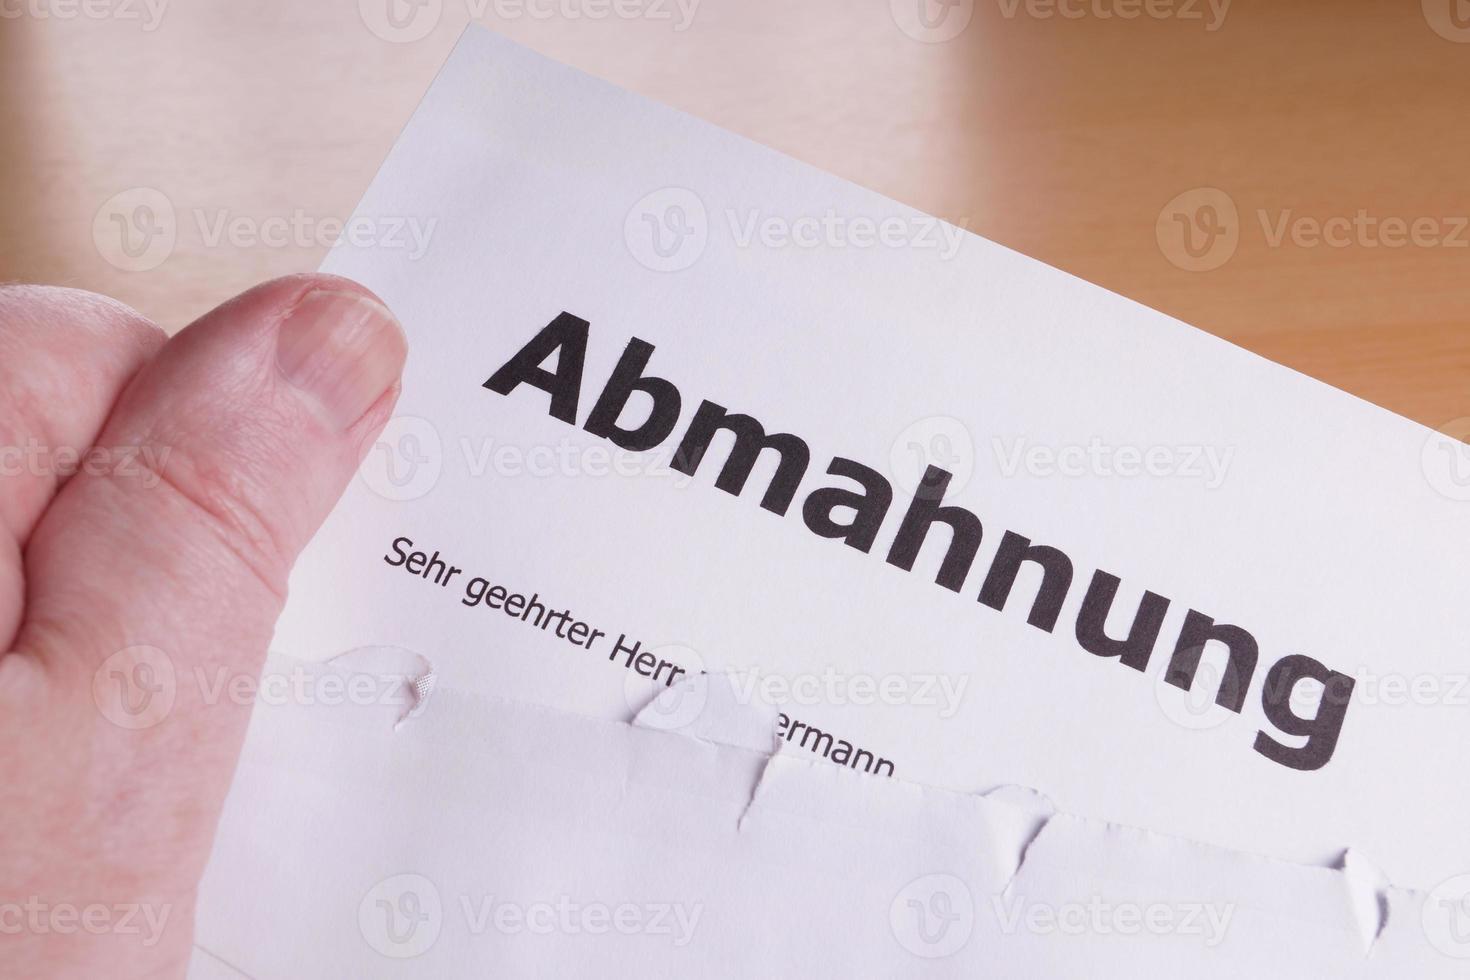 abmahnung is een Duitse opzeggingsbrief foto